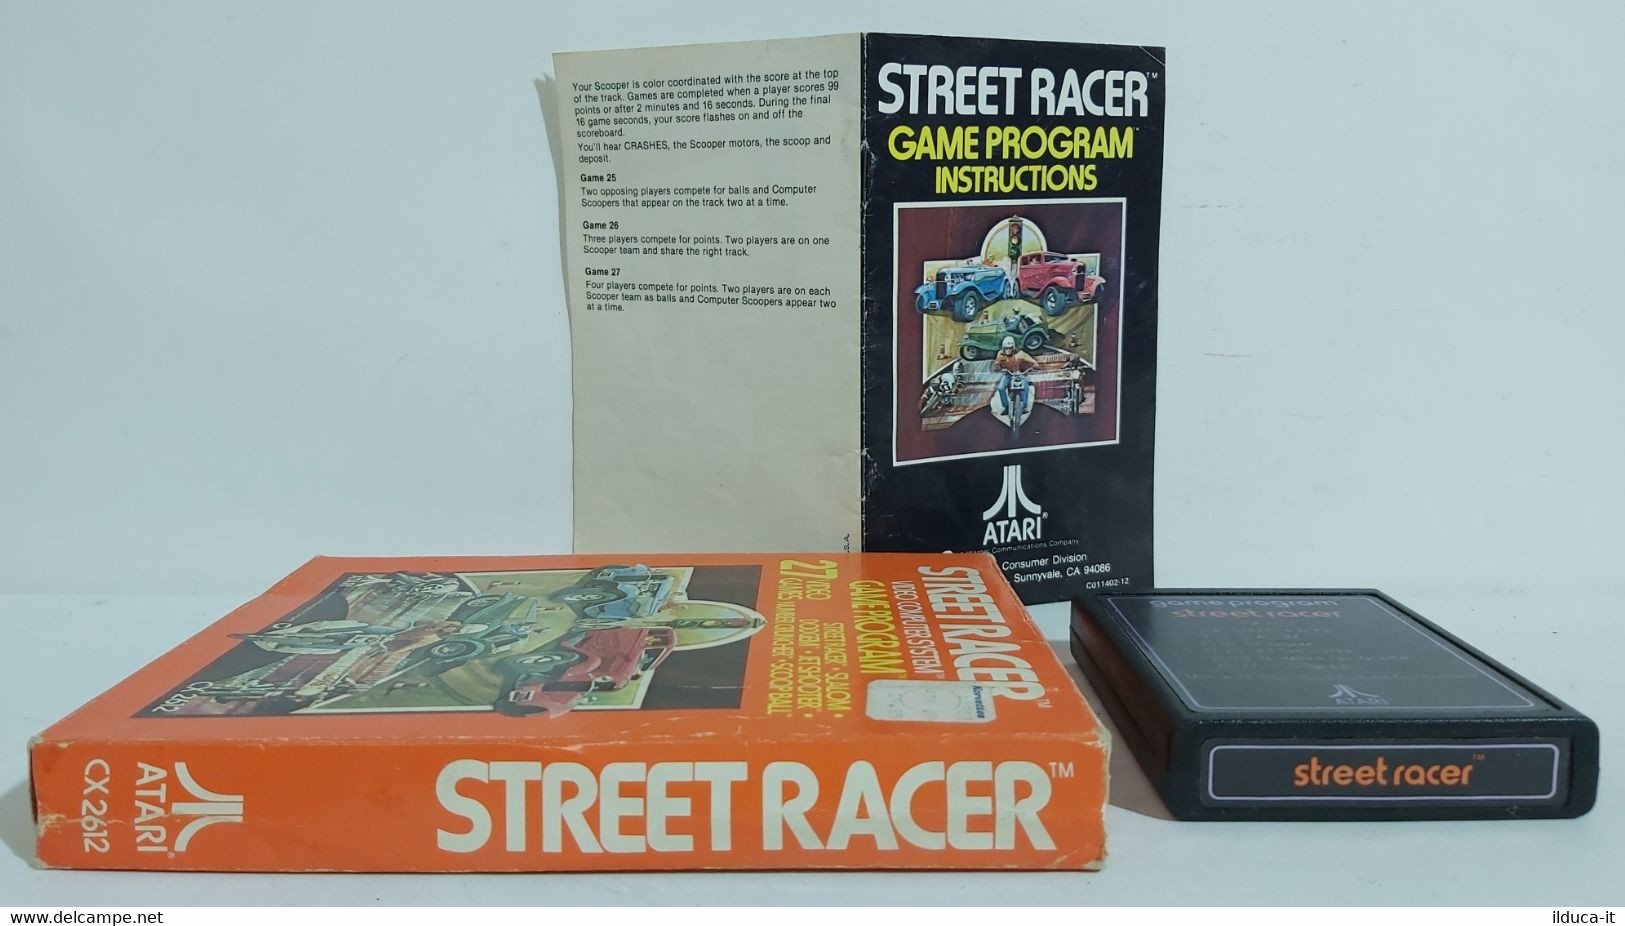 I100828 Vintage Videogame Retrogame - STREET RACER - Atari CX2612 - Atari 2600